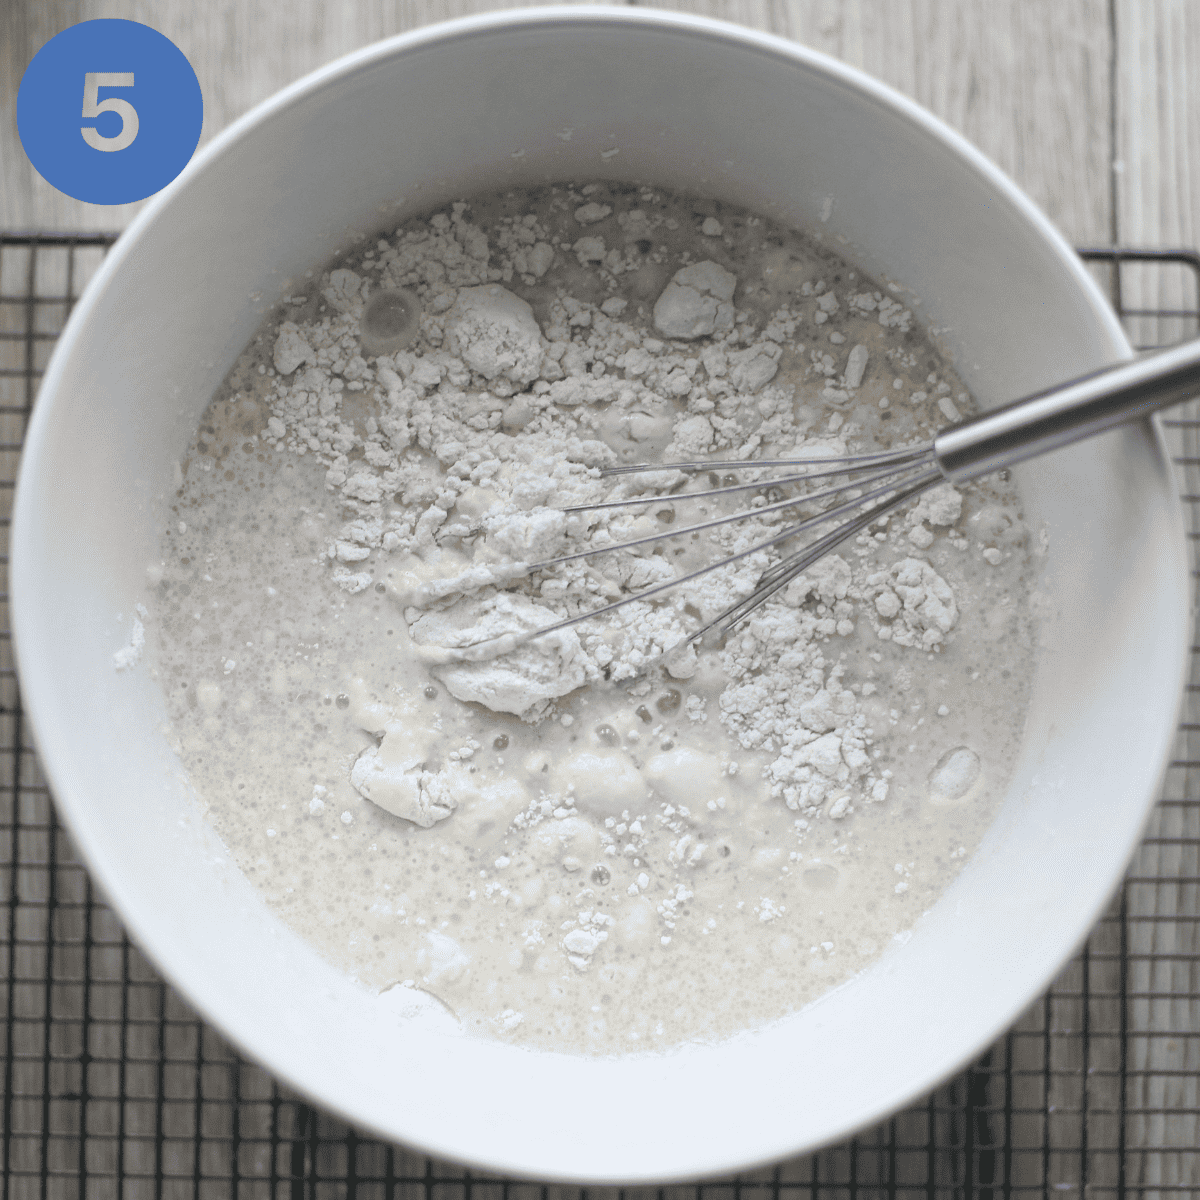 Adding the soured milk to the flour.